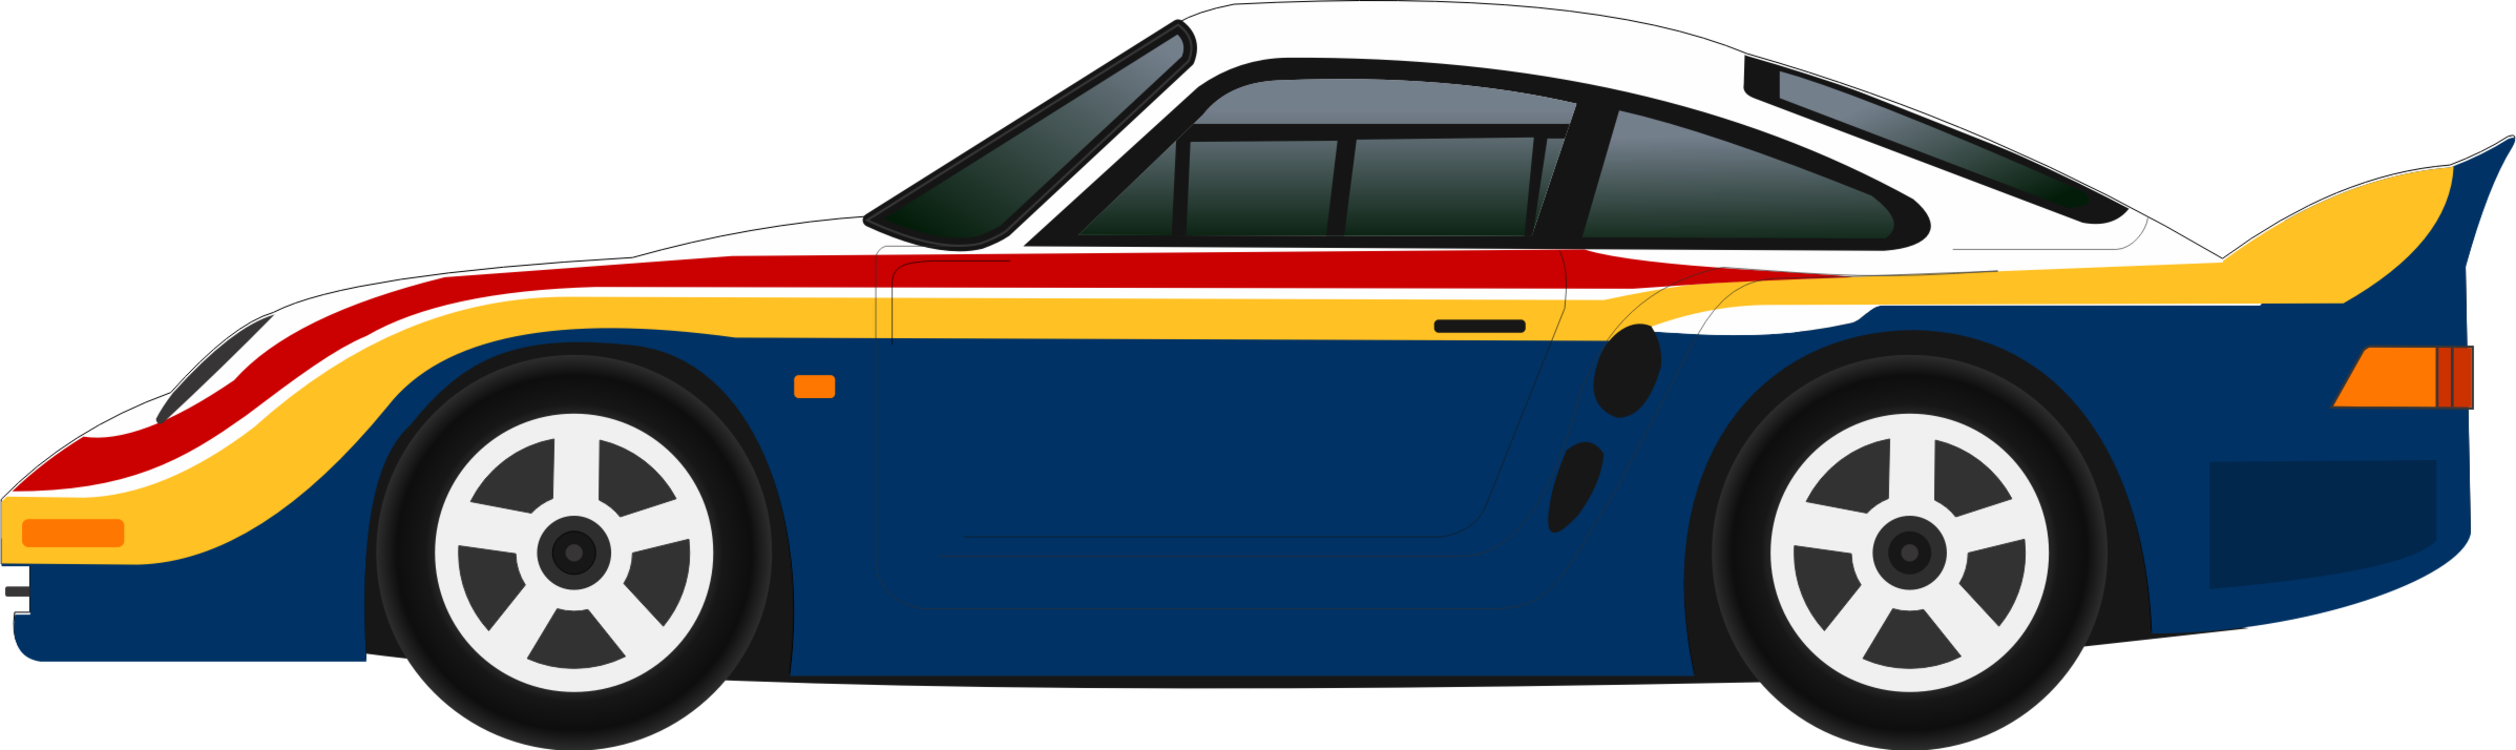 CoupĂŠ,Porsche,Sports Car Racing